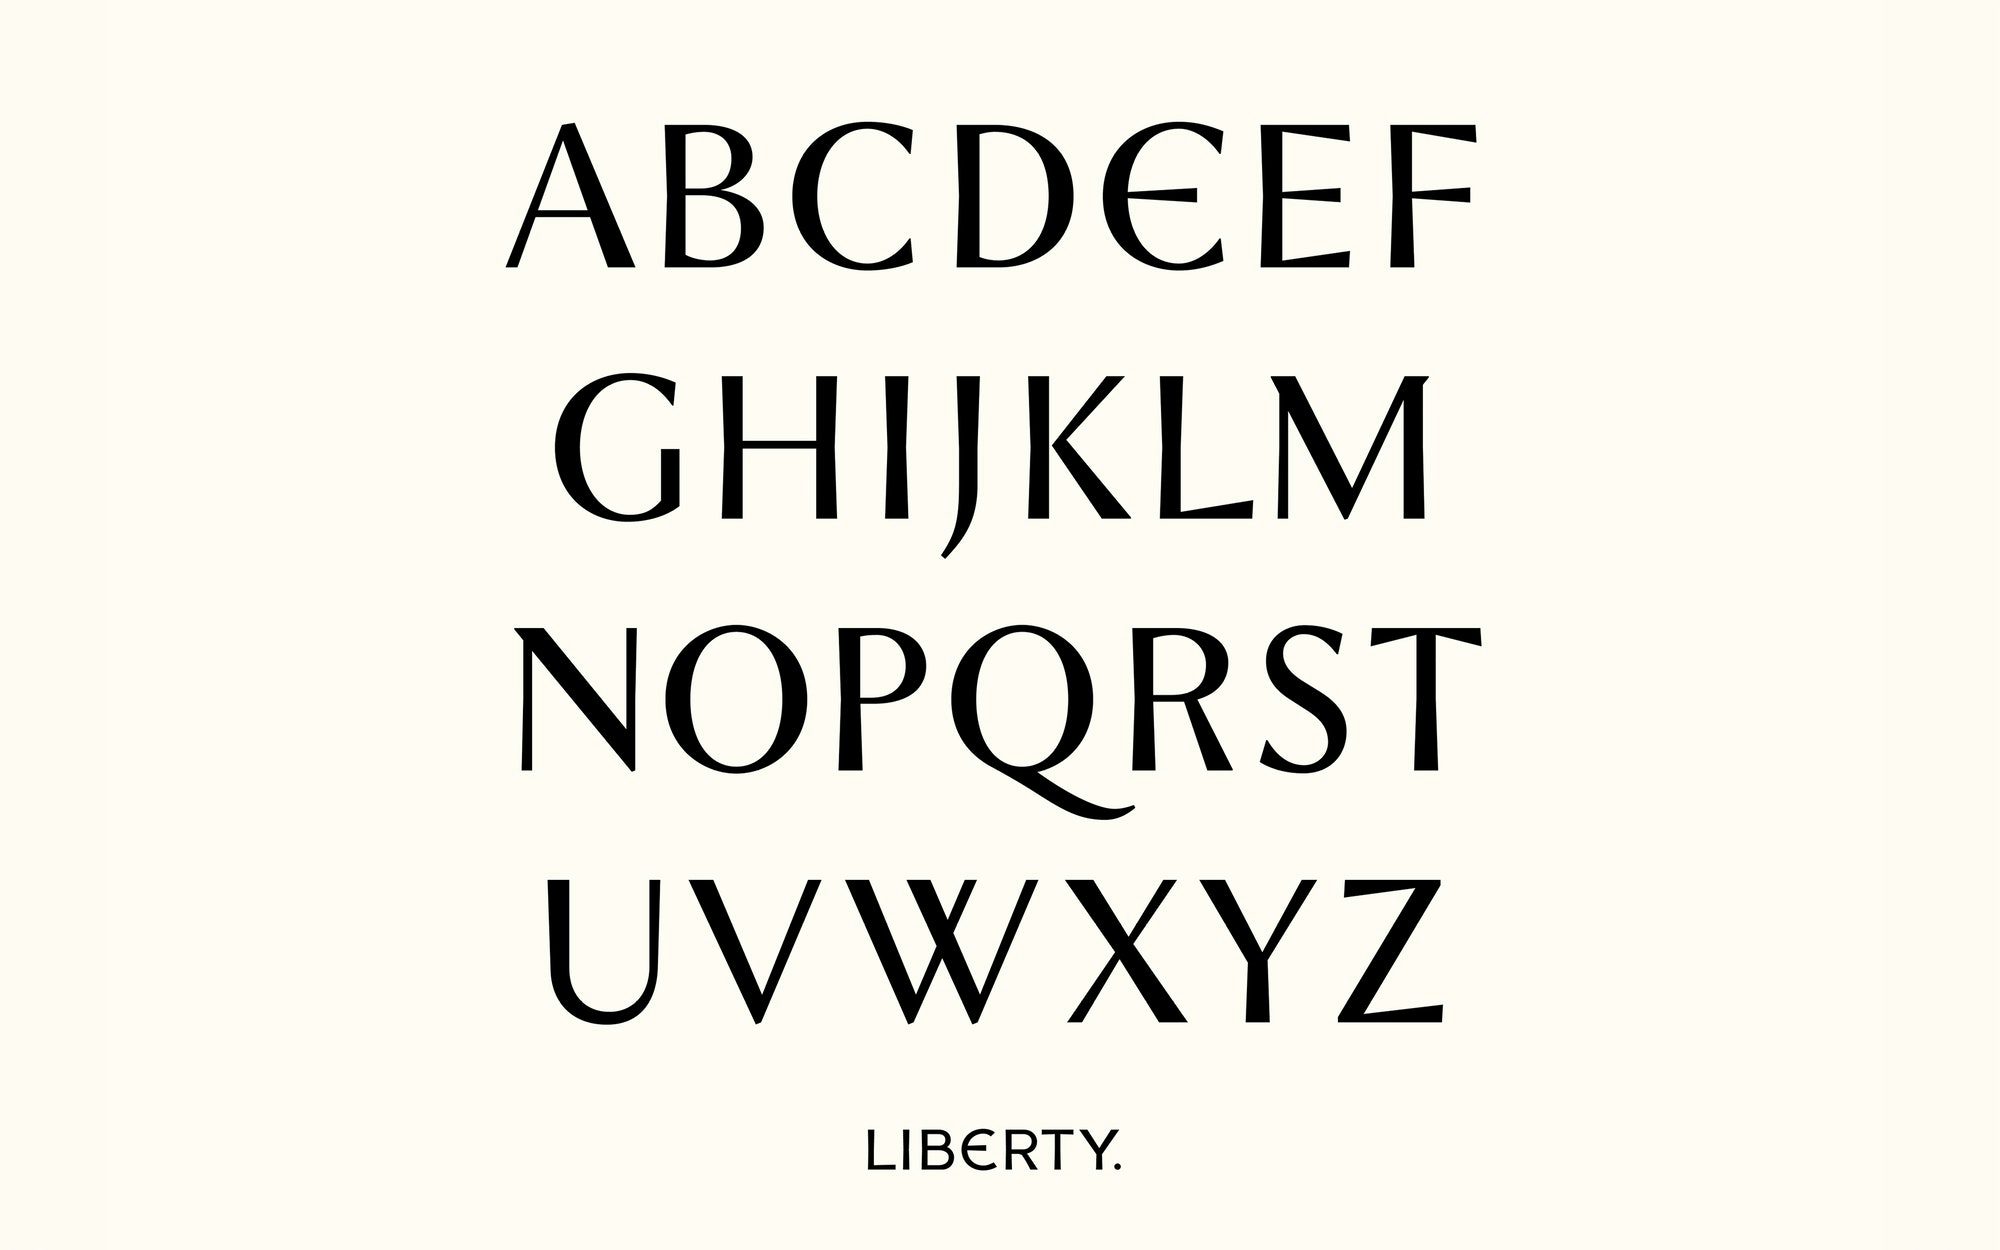 Liberty visual design by Pentagram